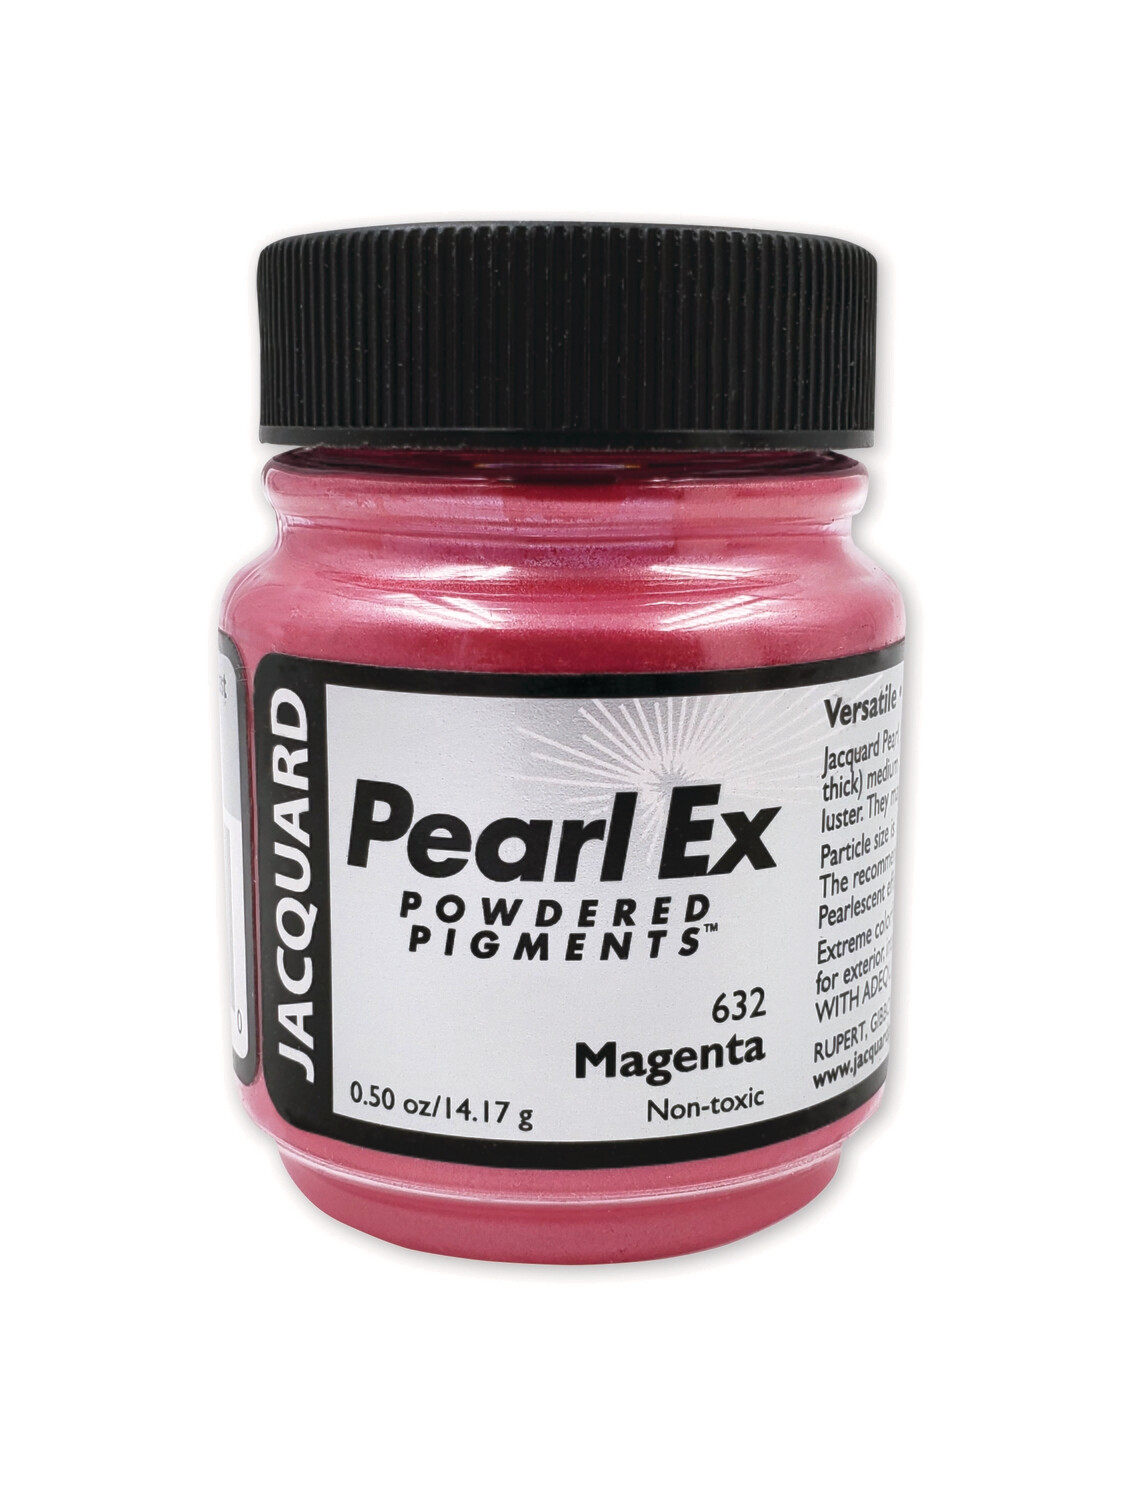 Pearl Ex Powdered Pigments- Magenta